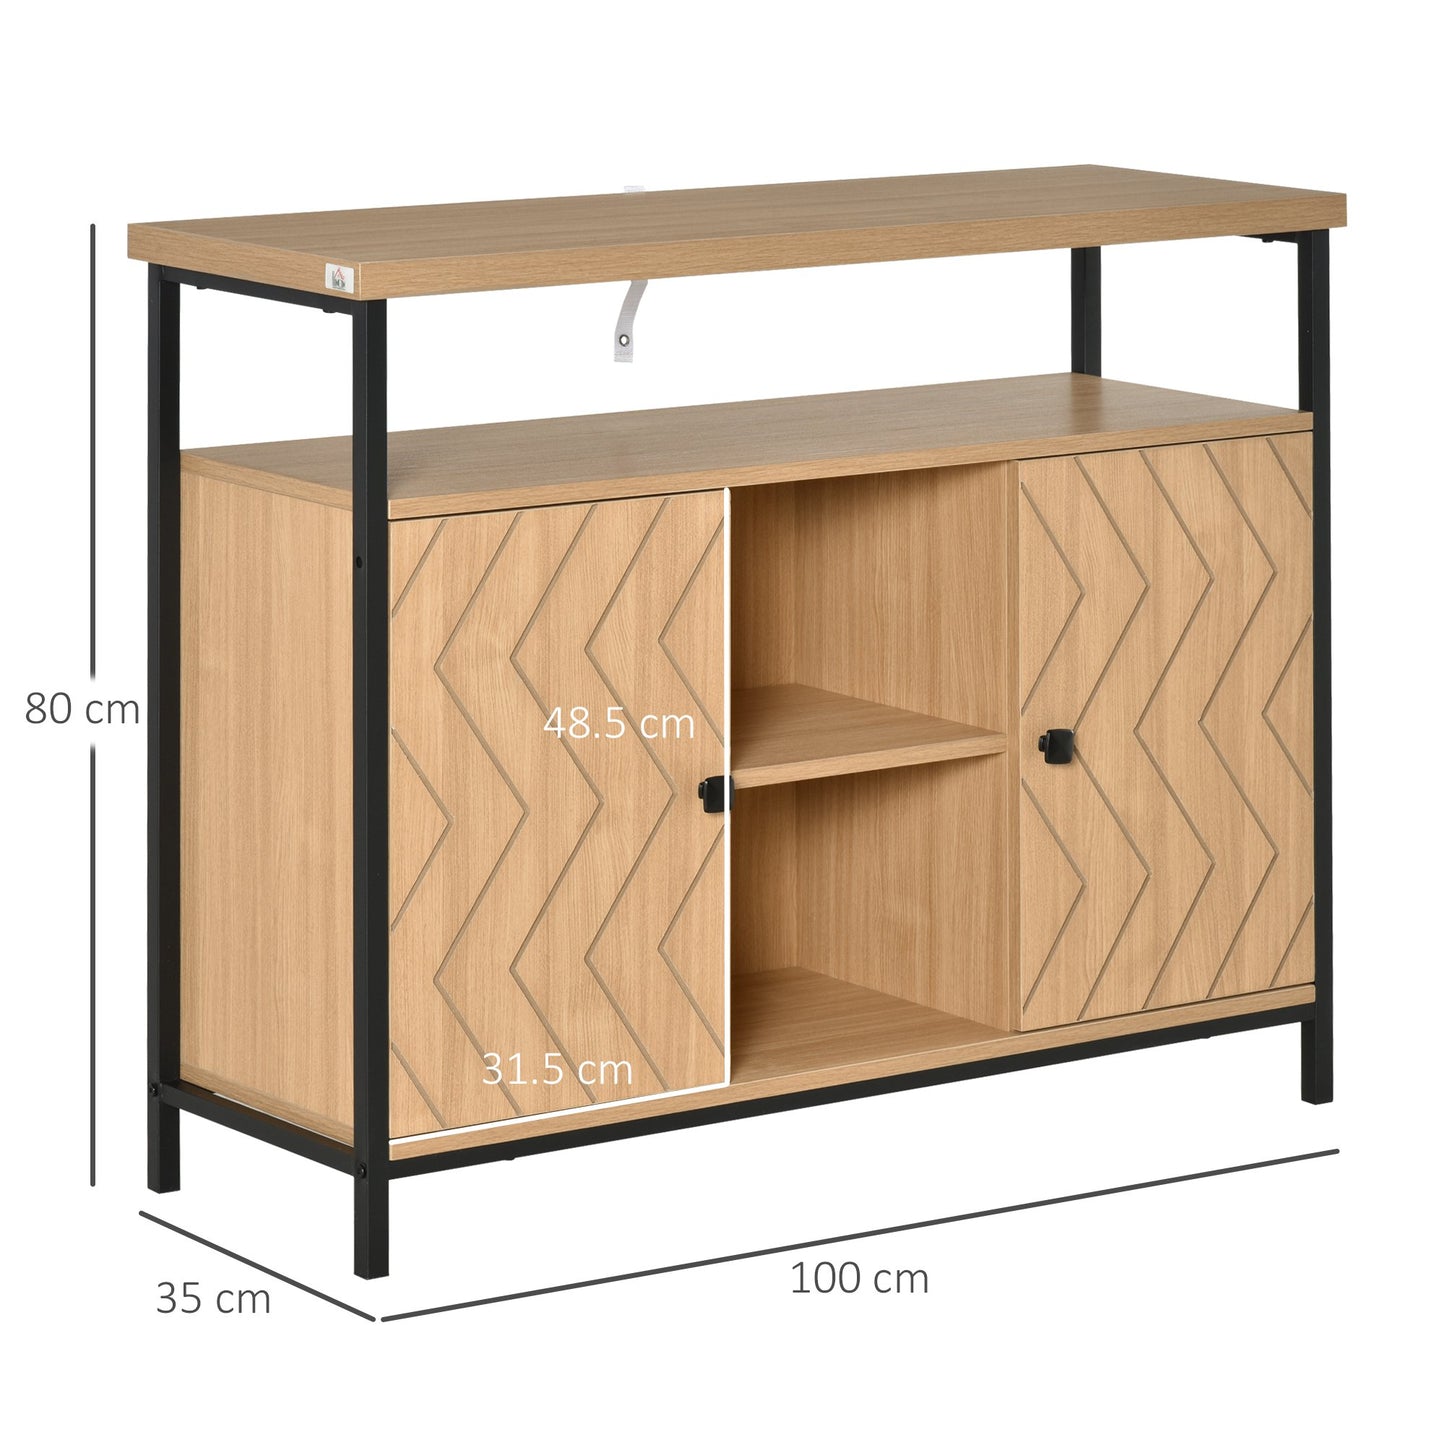 HOMCOM Sideboard Storage Cabinet Cupboard with Doors & Adjustable Shelves Dining Room